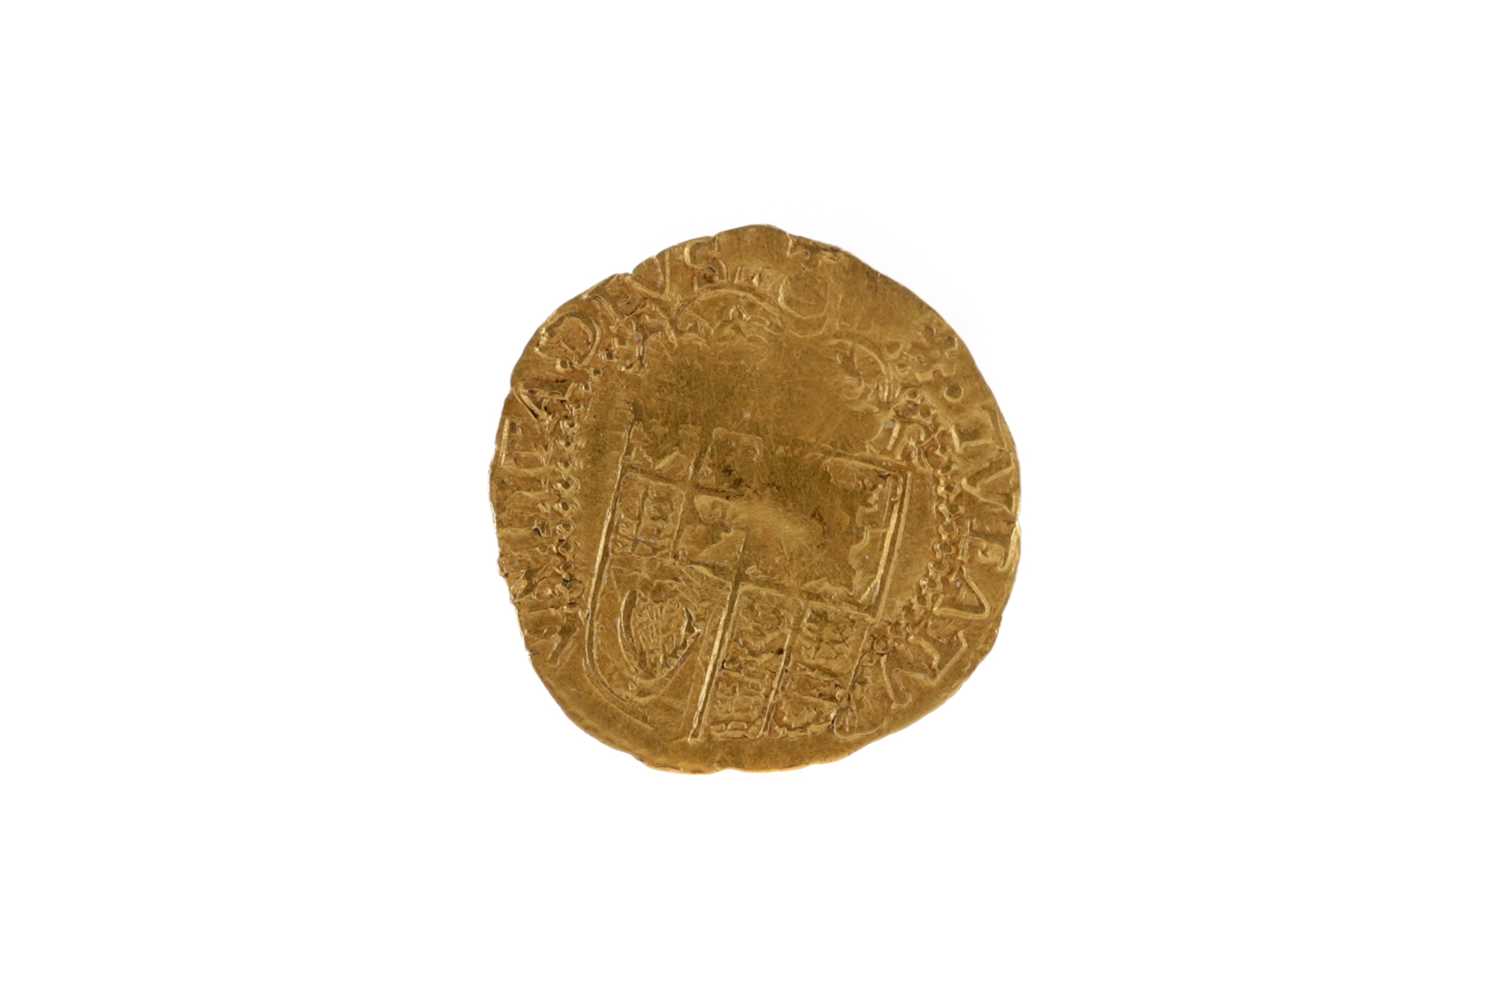 Lot 120 - A JAMES I (1603-1625) GOLD HALF CROWN